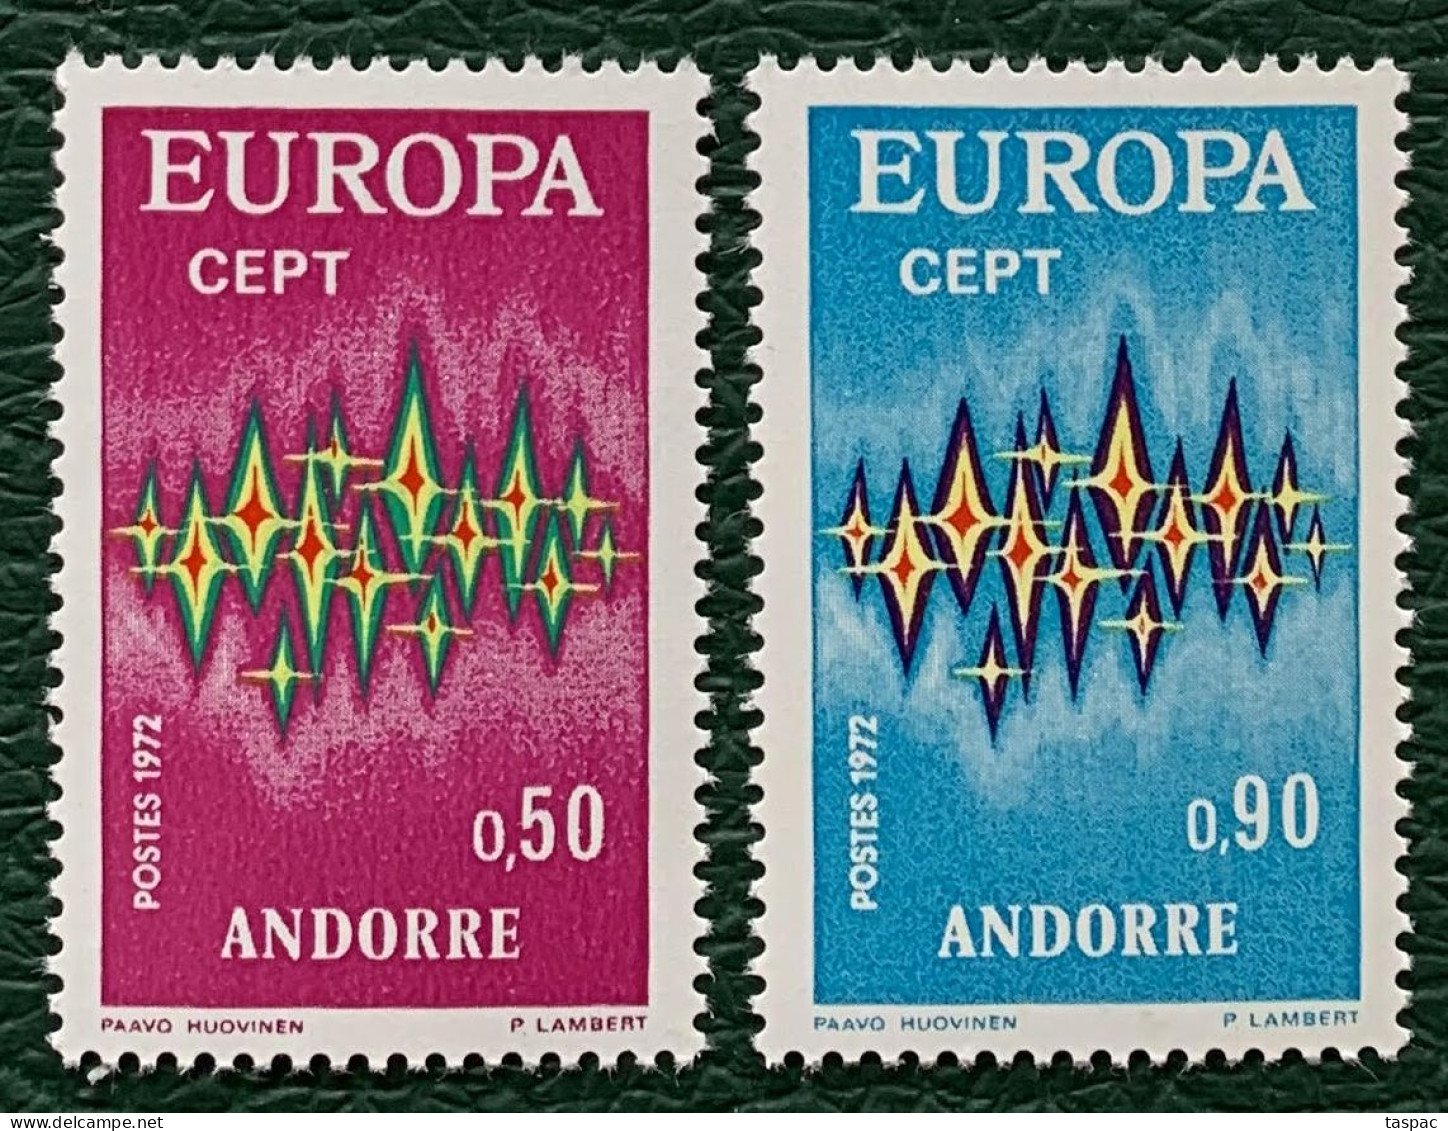 French Andorra 1972 Mi# 238-239 ** MNH - Europa / Stars - 1972